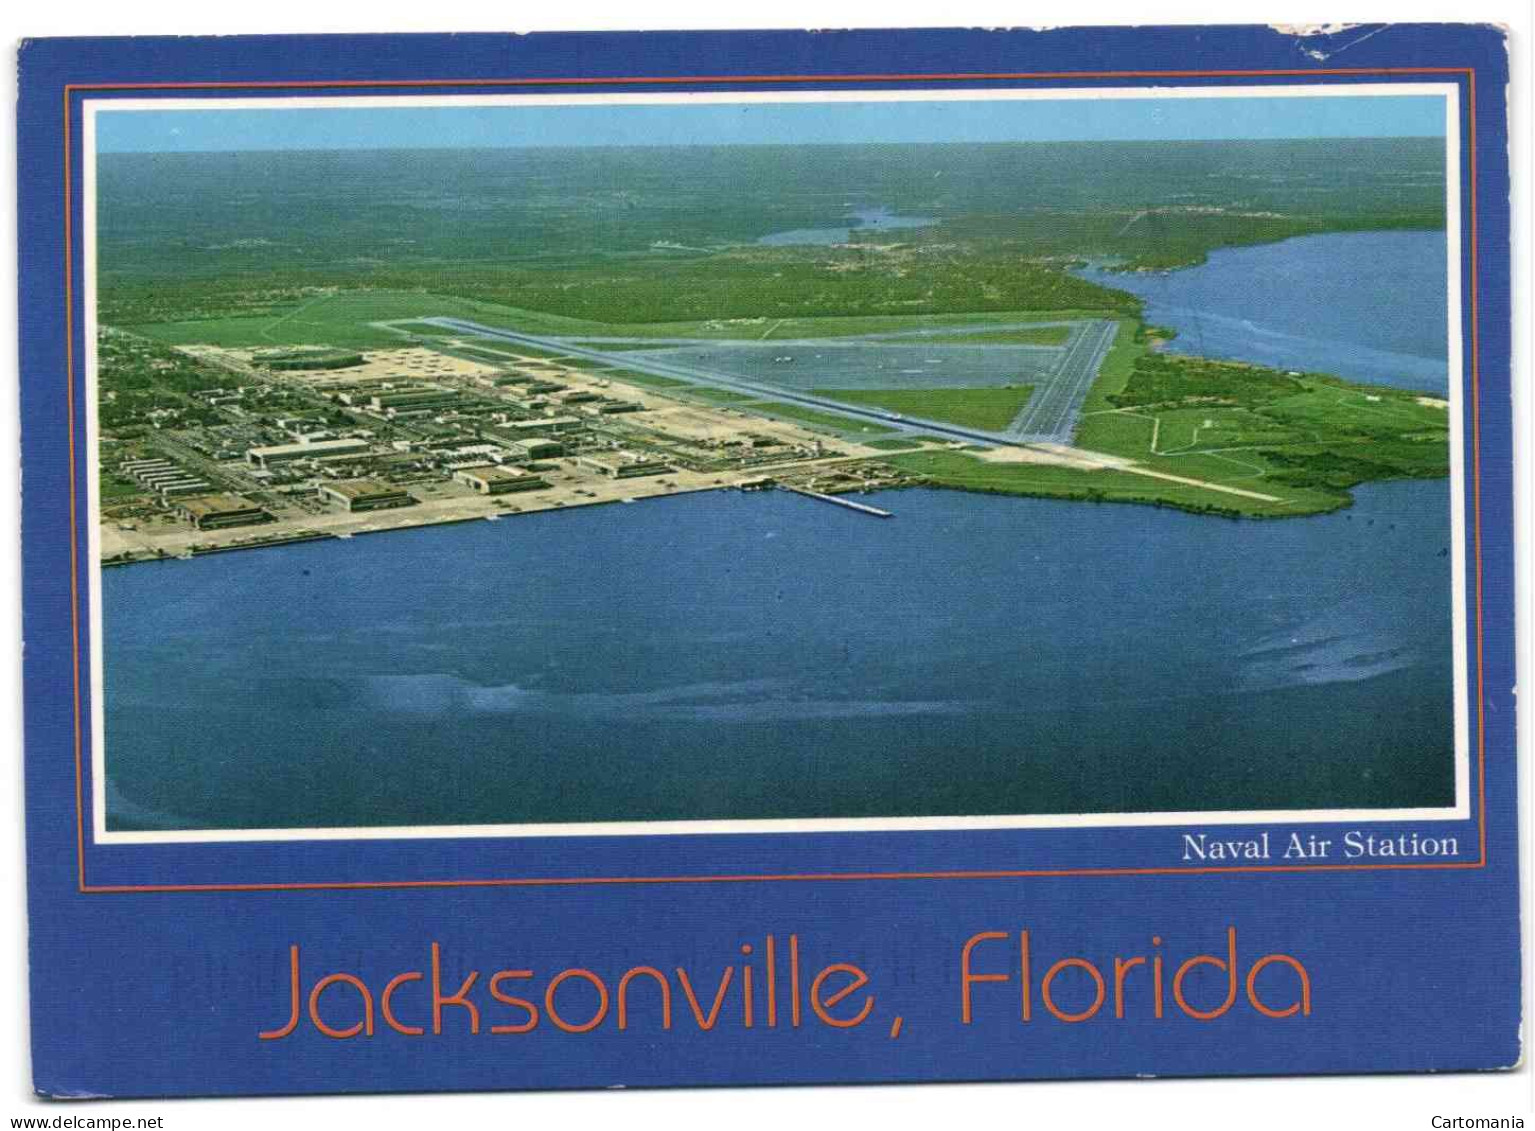 Jaksonville - Florida - Naval Air Station - Jacksonville